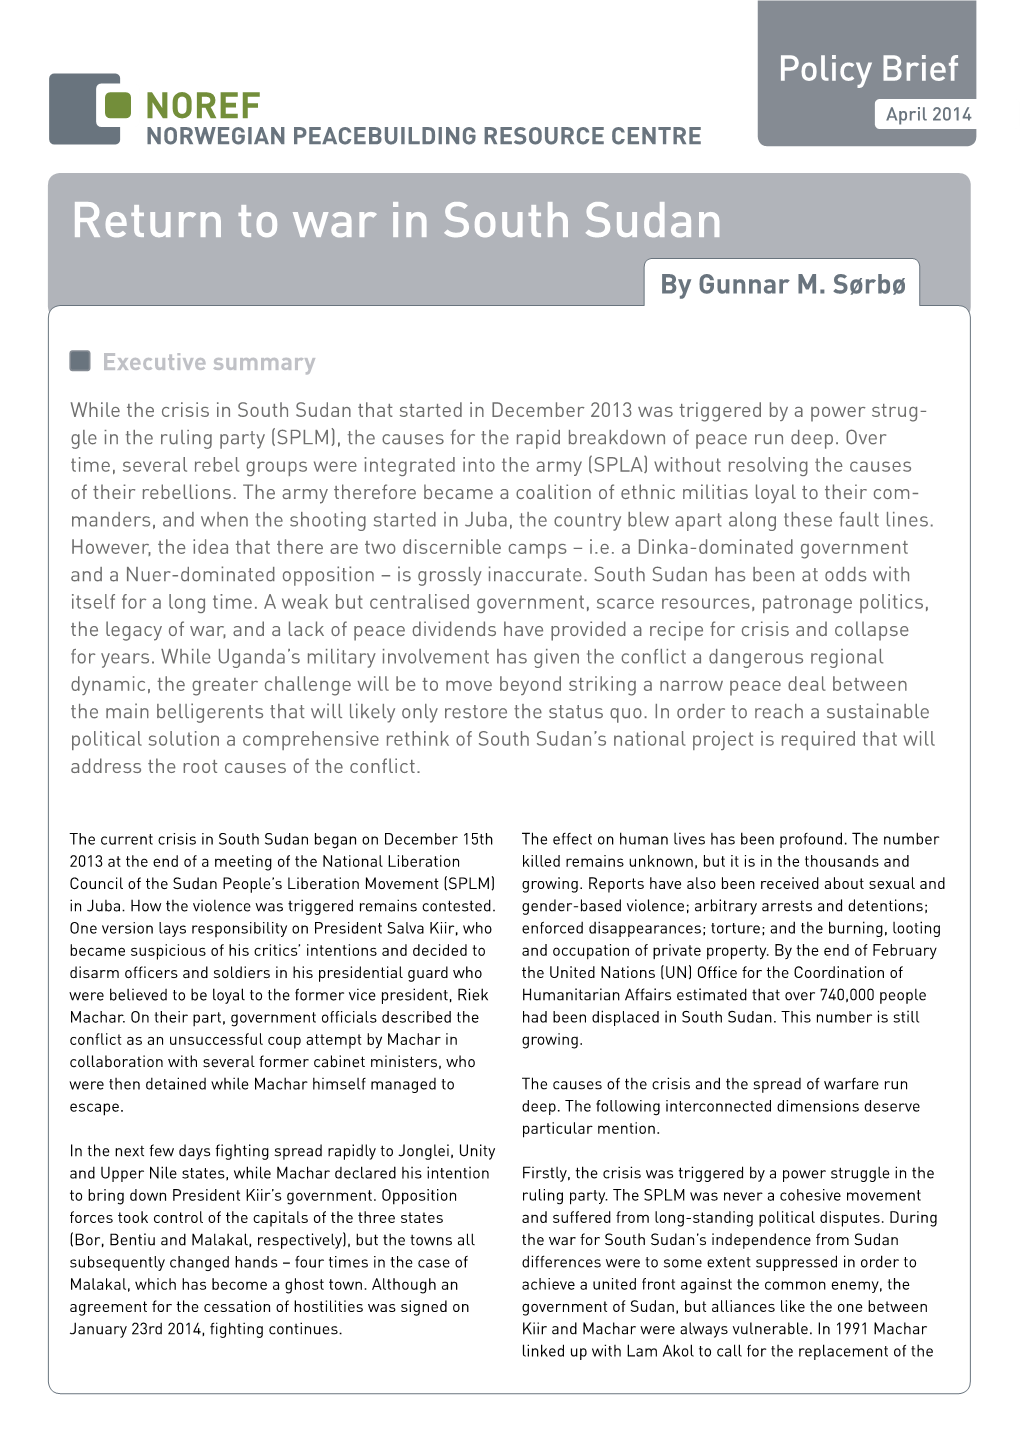 Return to War in South Sudan by Gunnar M